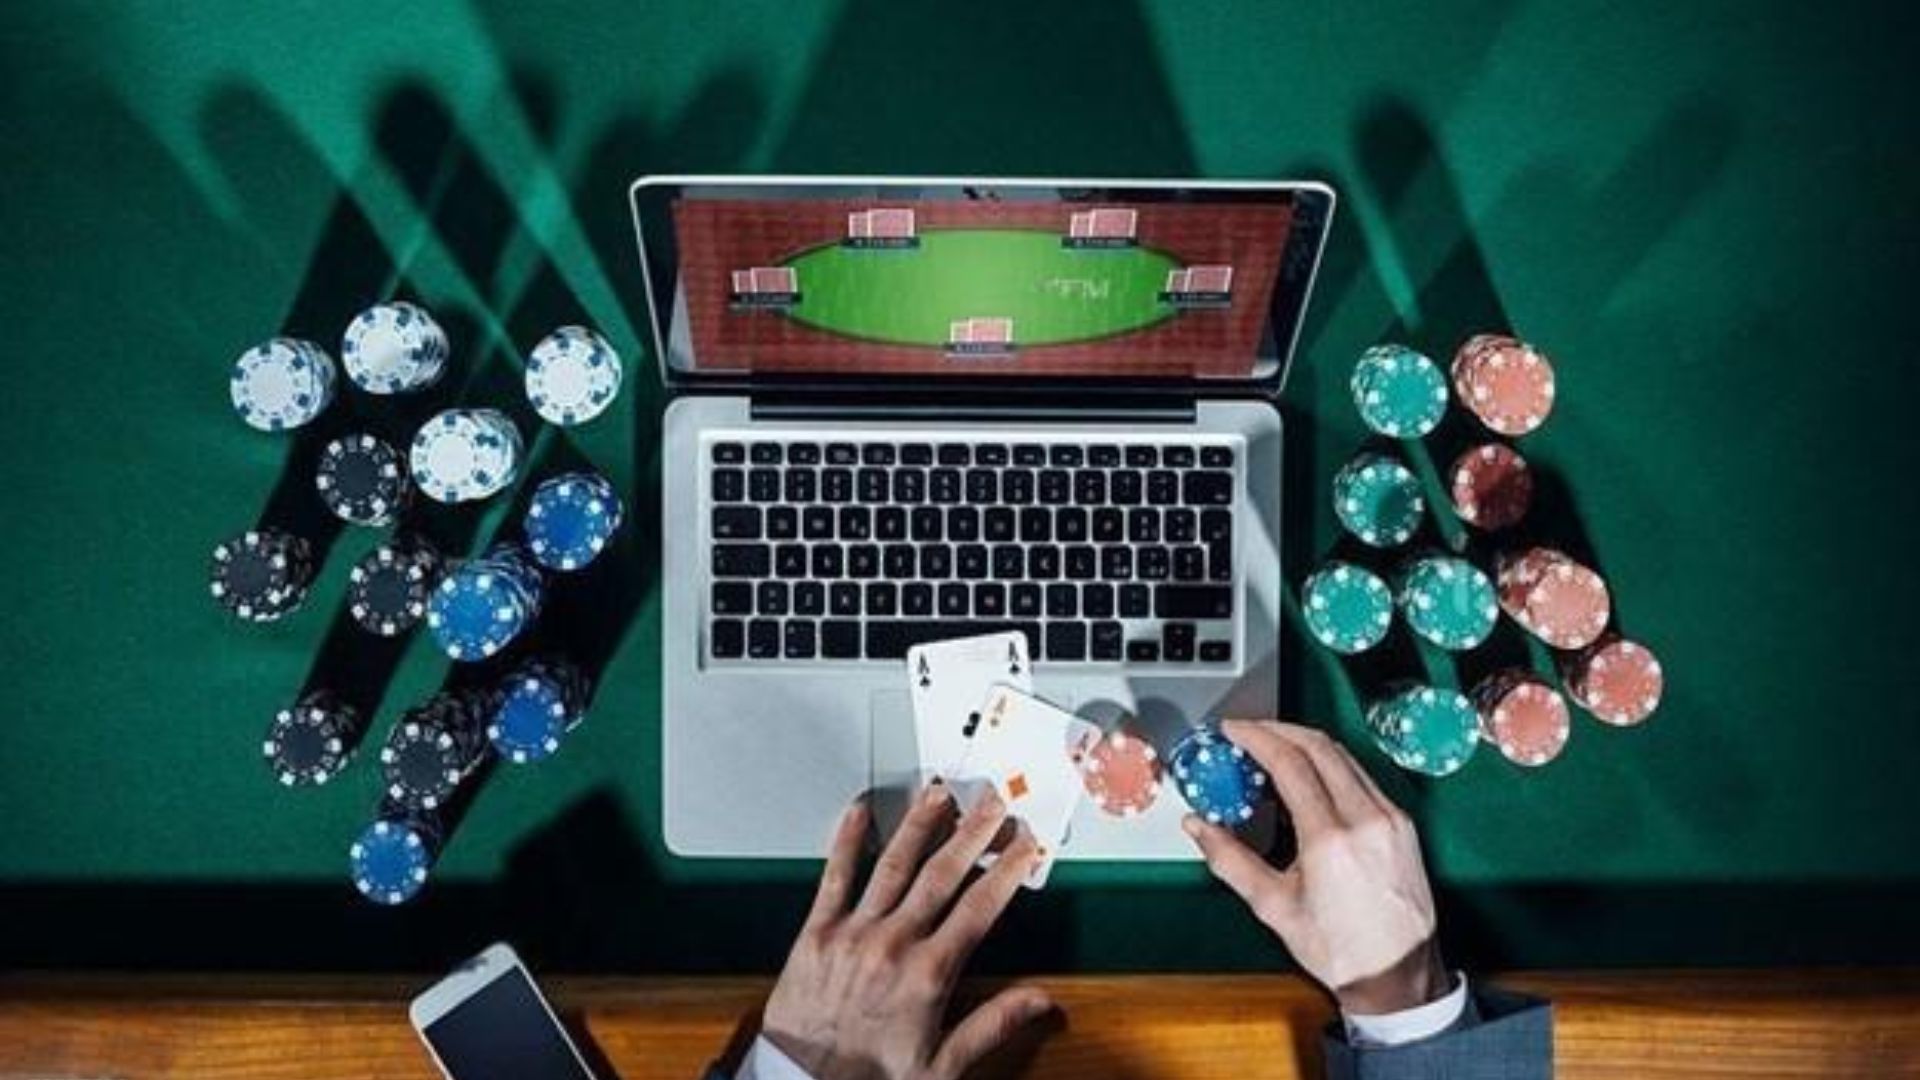 Internet Casinos Online Without Much Work To Start Betting